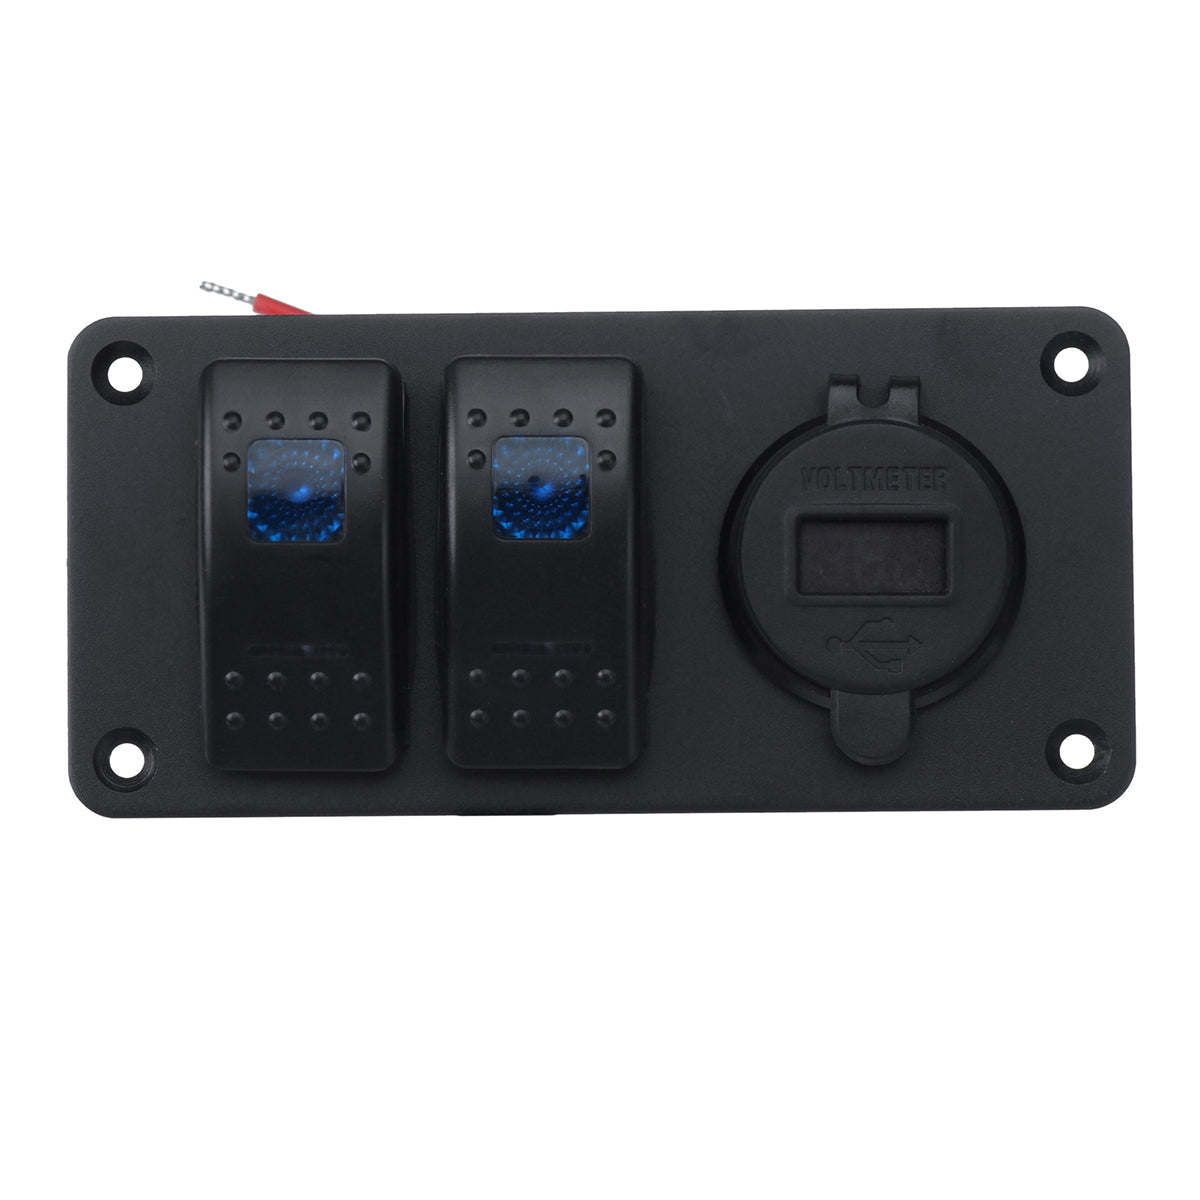 Black LED Switch Panel 2 Gang Rocker Switch Toggle QC 3.0 USB Blue LED Car Marine Boat